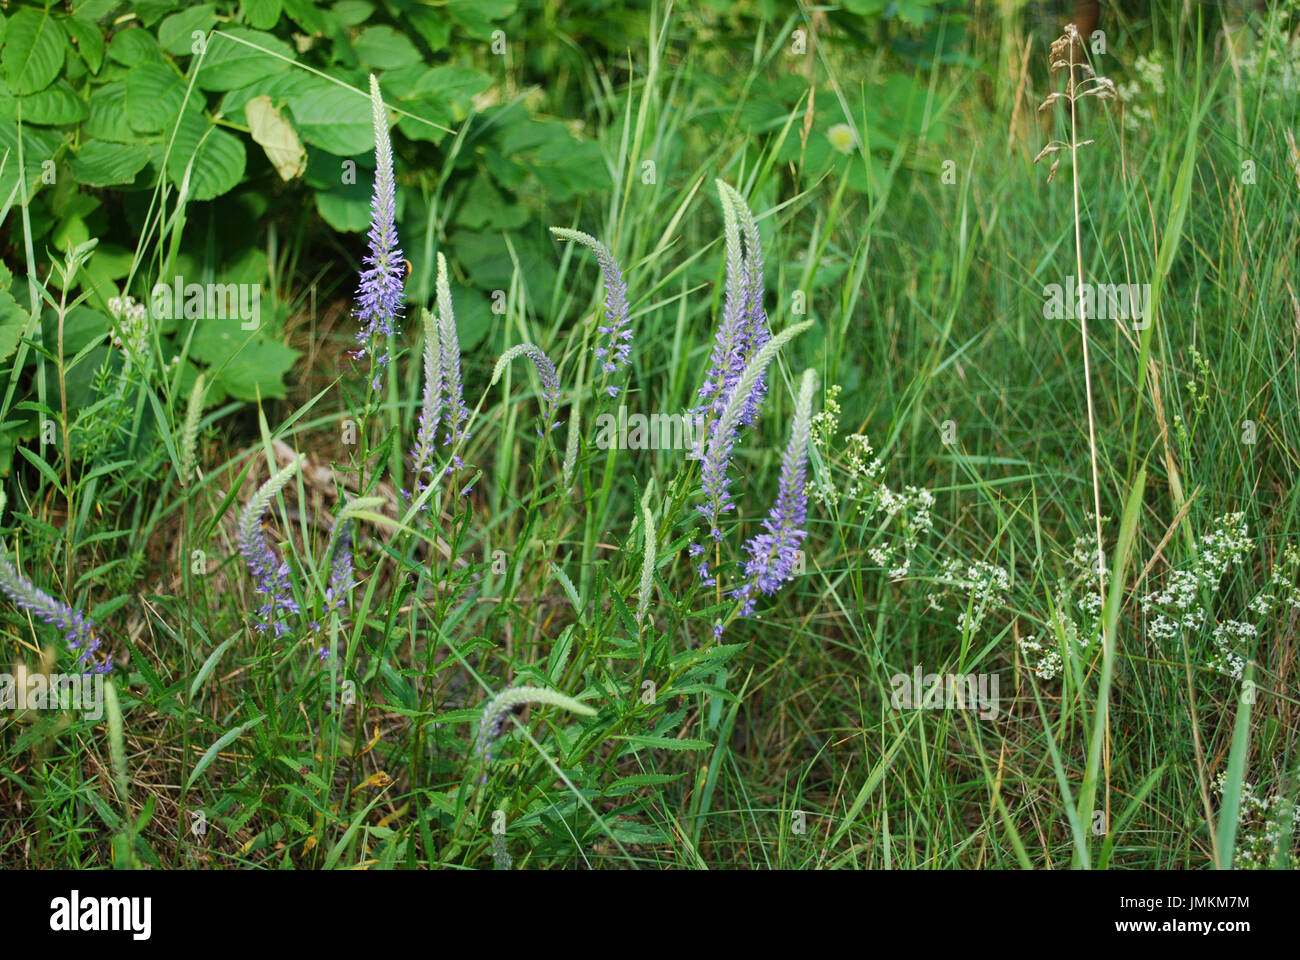 Veronica longifolia violet flowers from Plantaginaceae family. Stock Photo